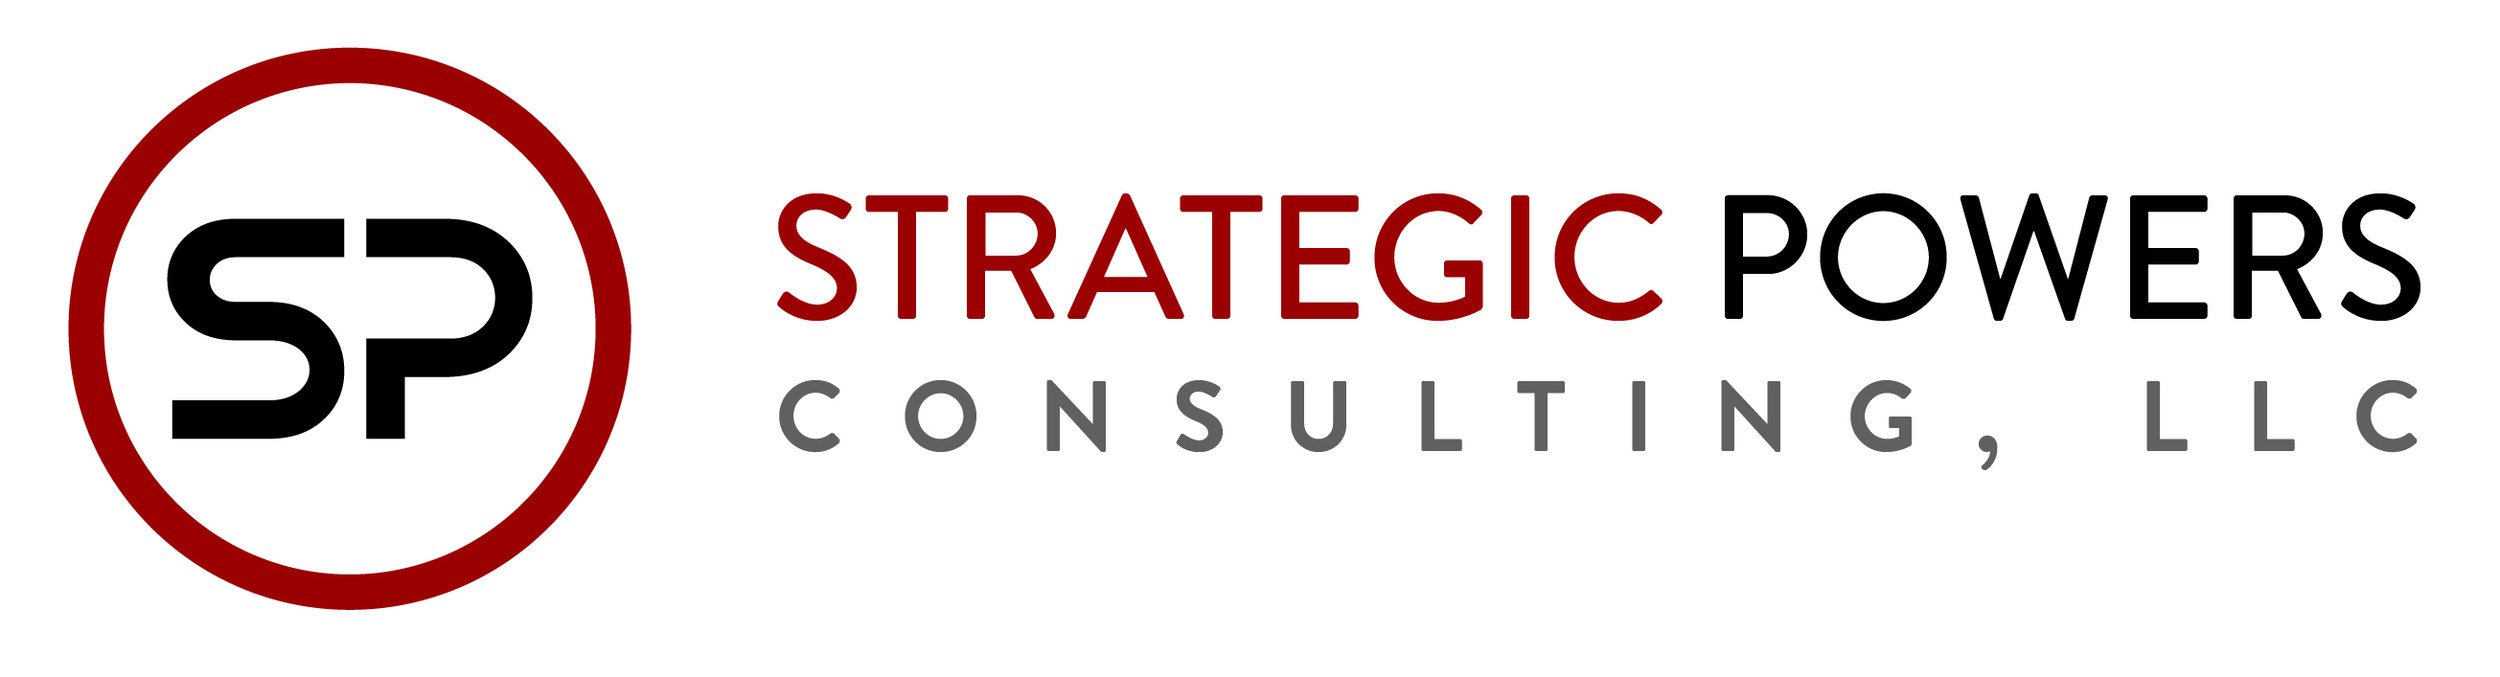 Strategic Powers Consulting, LLC